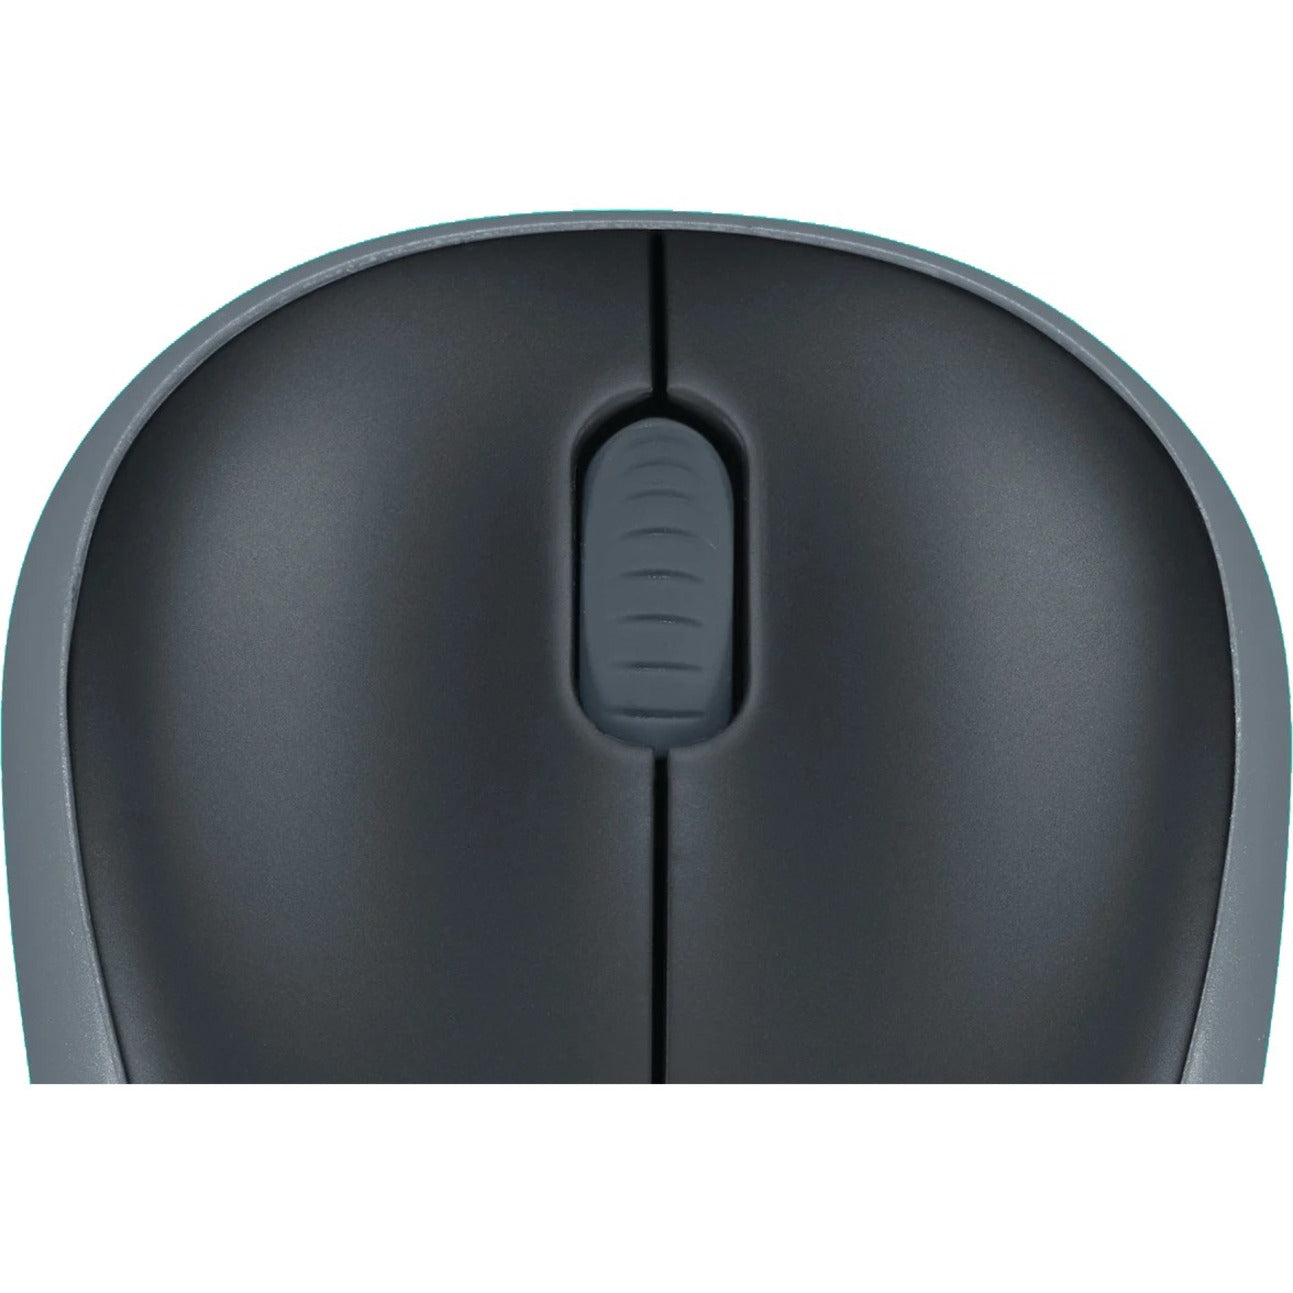 Logitech 910-002225 Plug-and-Play Wireless Mouse, Black/Silver, Ergonomic Fit, 1000 dpi, 2.4 GHz